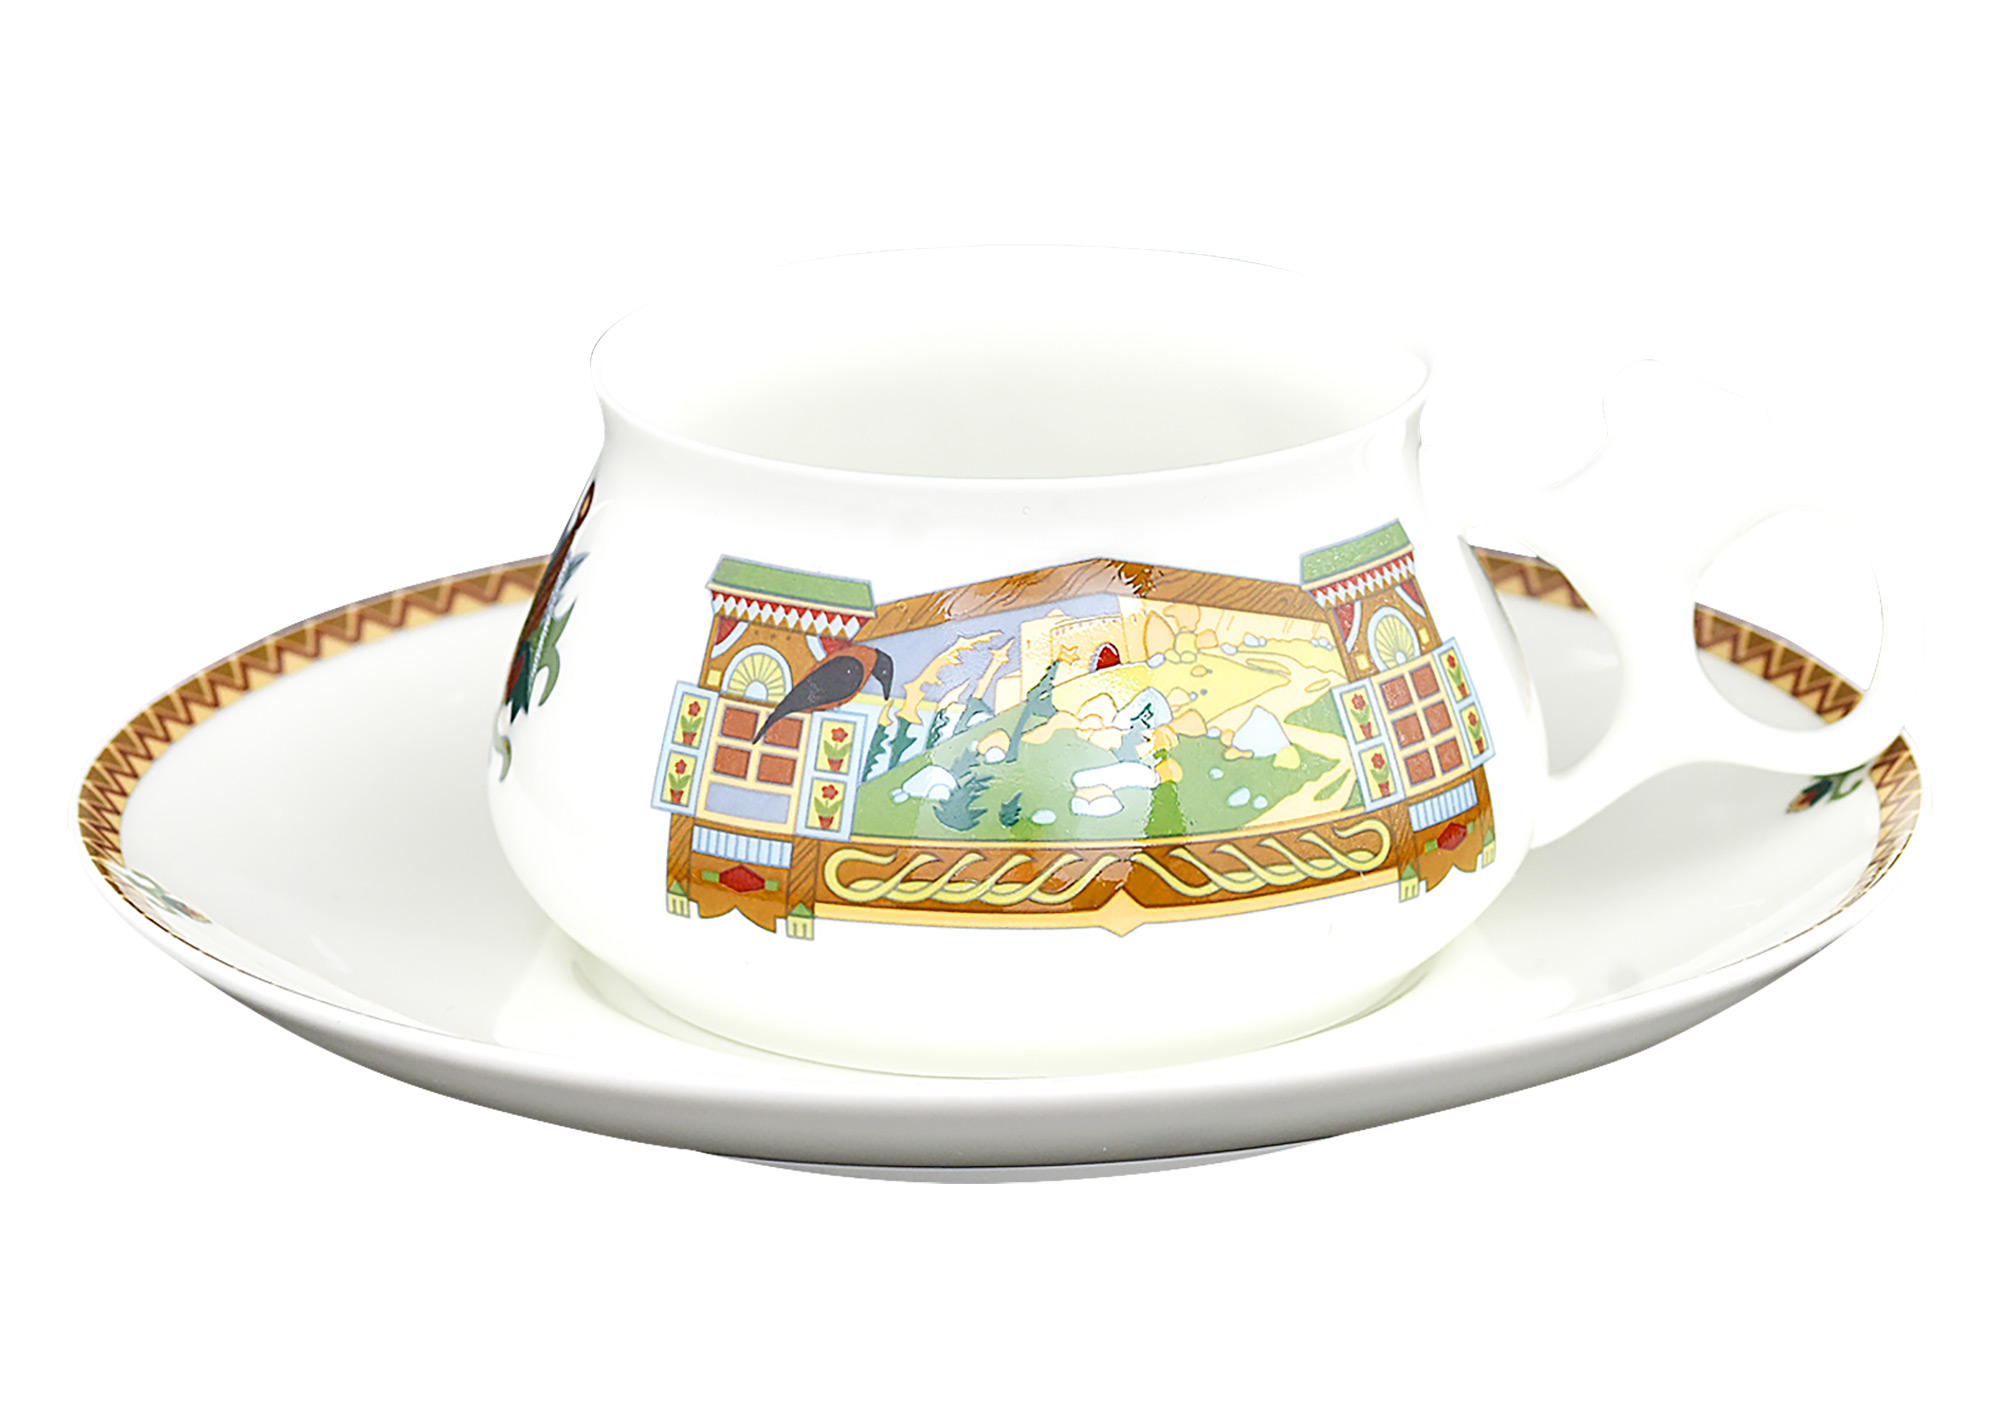 Buy Bilibin's Fairy Tale Landscape Bone China Tea Cup and Saucer at GoldenCockerel.com